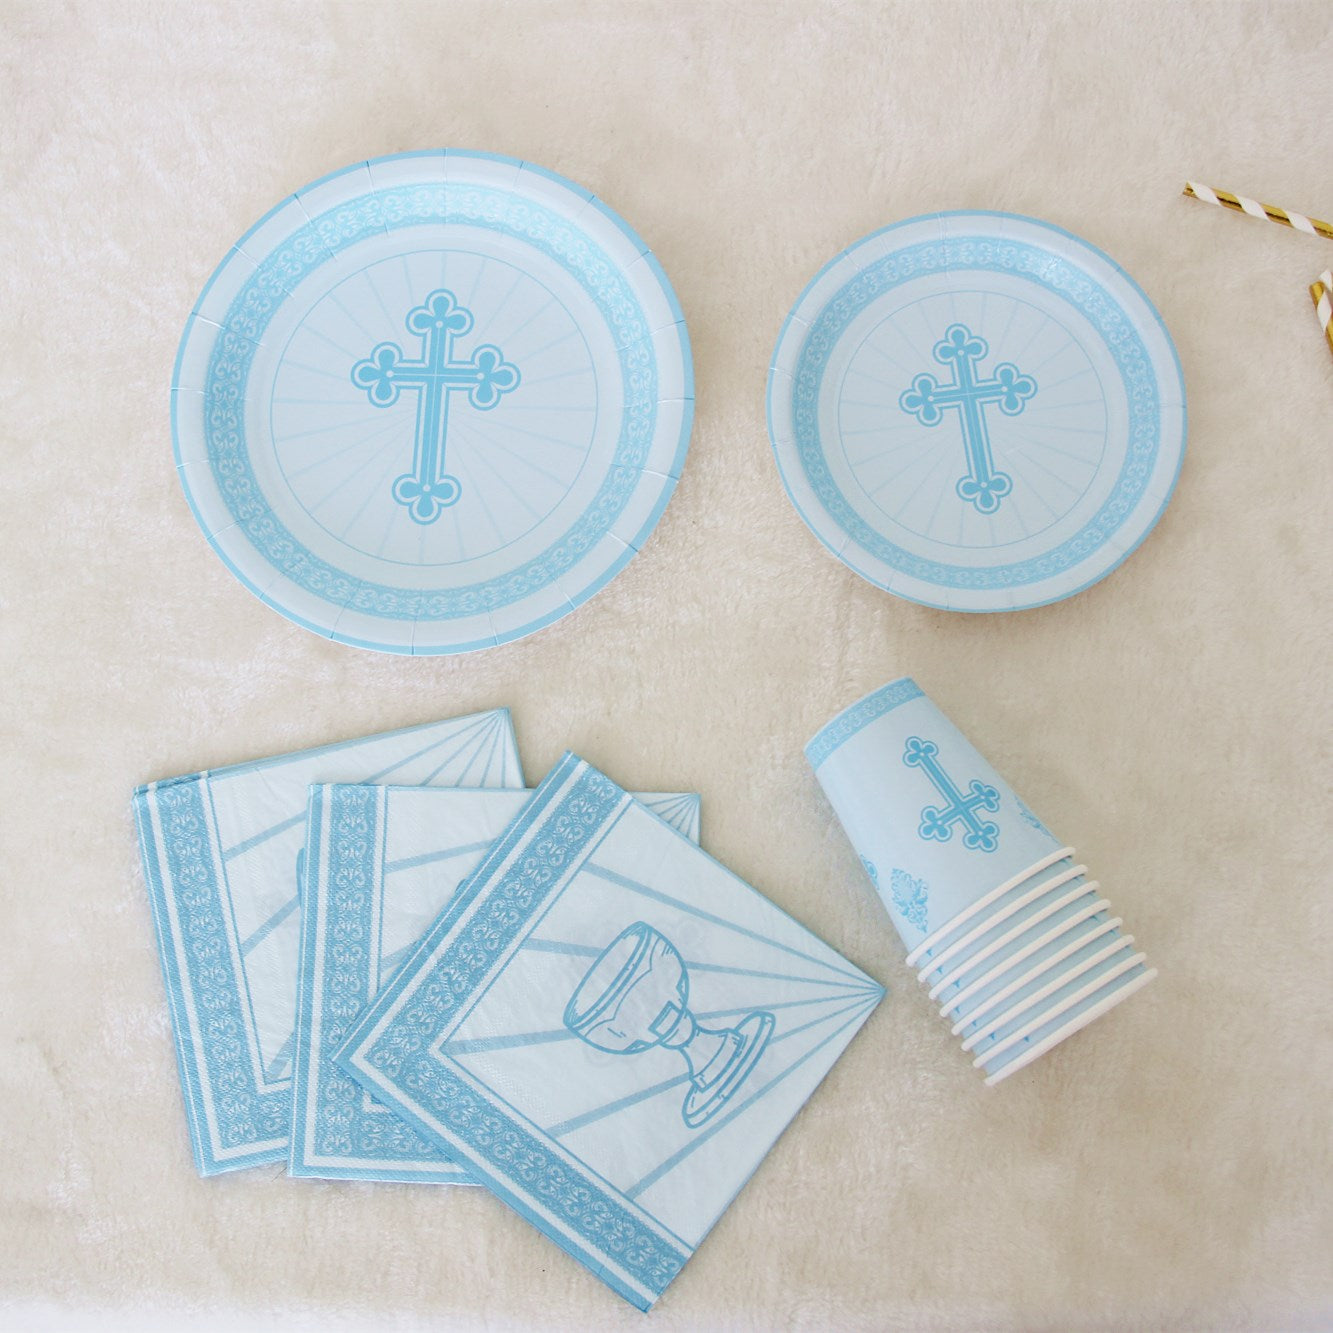 New 40PCs Cross Blue Pink Disposable Paper Tableware Set Paper Plates Cups Napkin Party Supplies Decoration